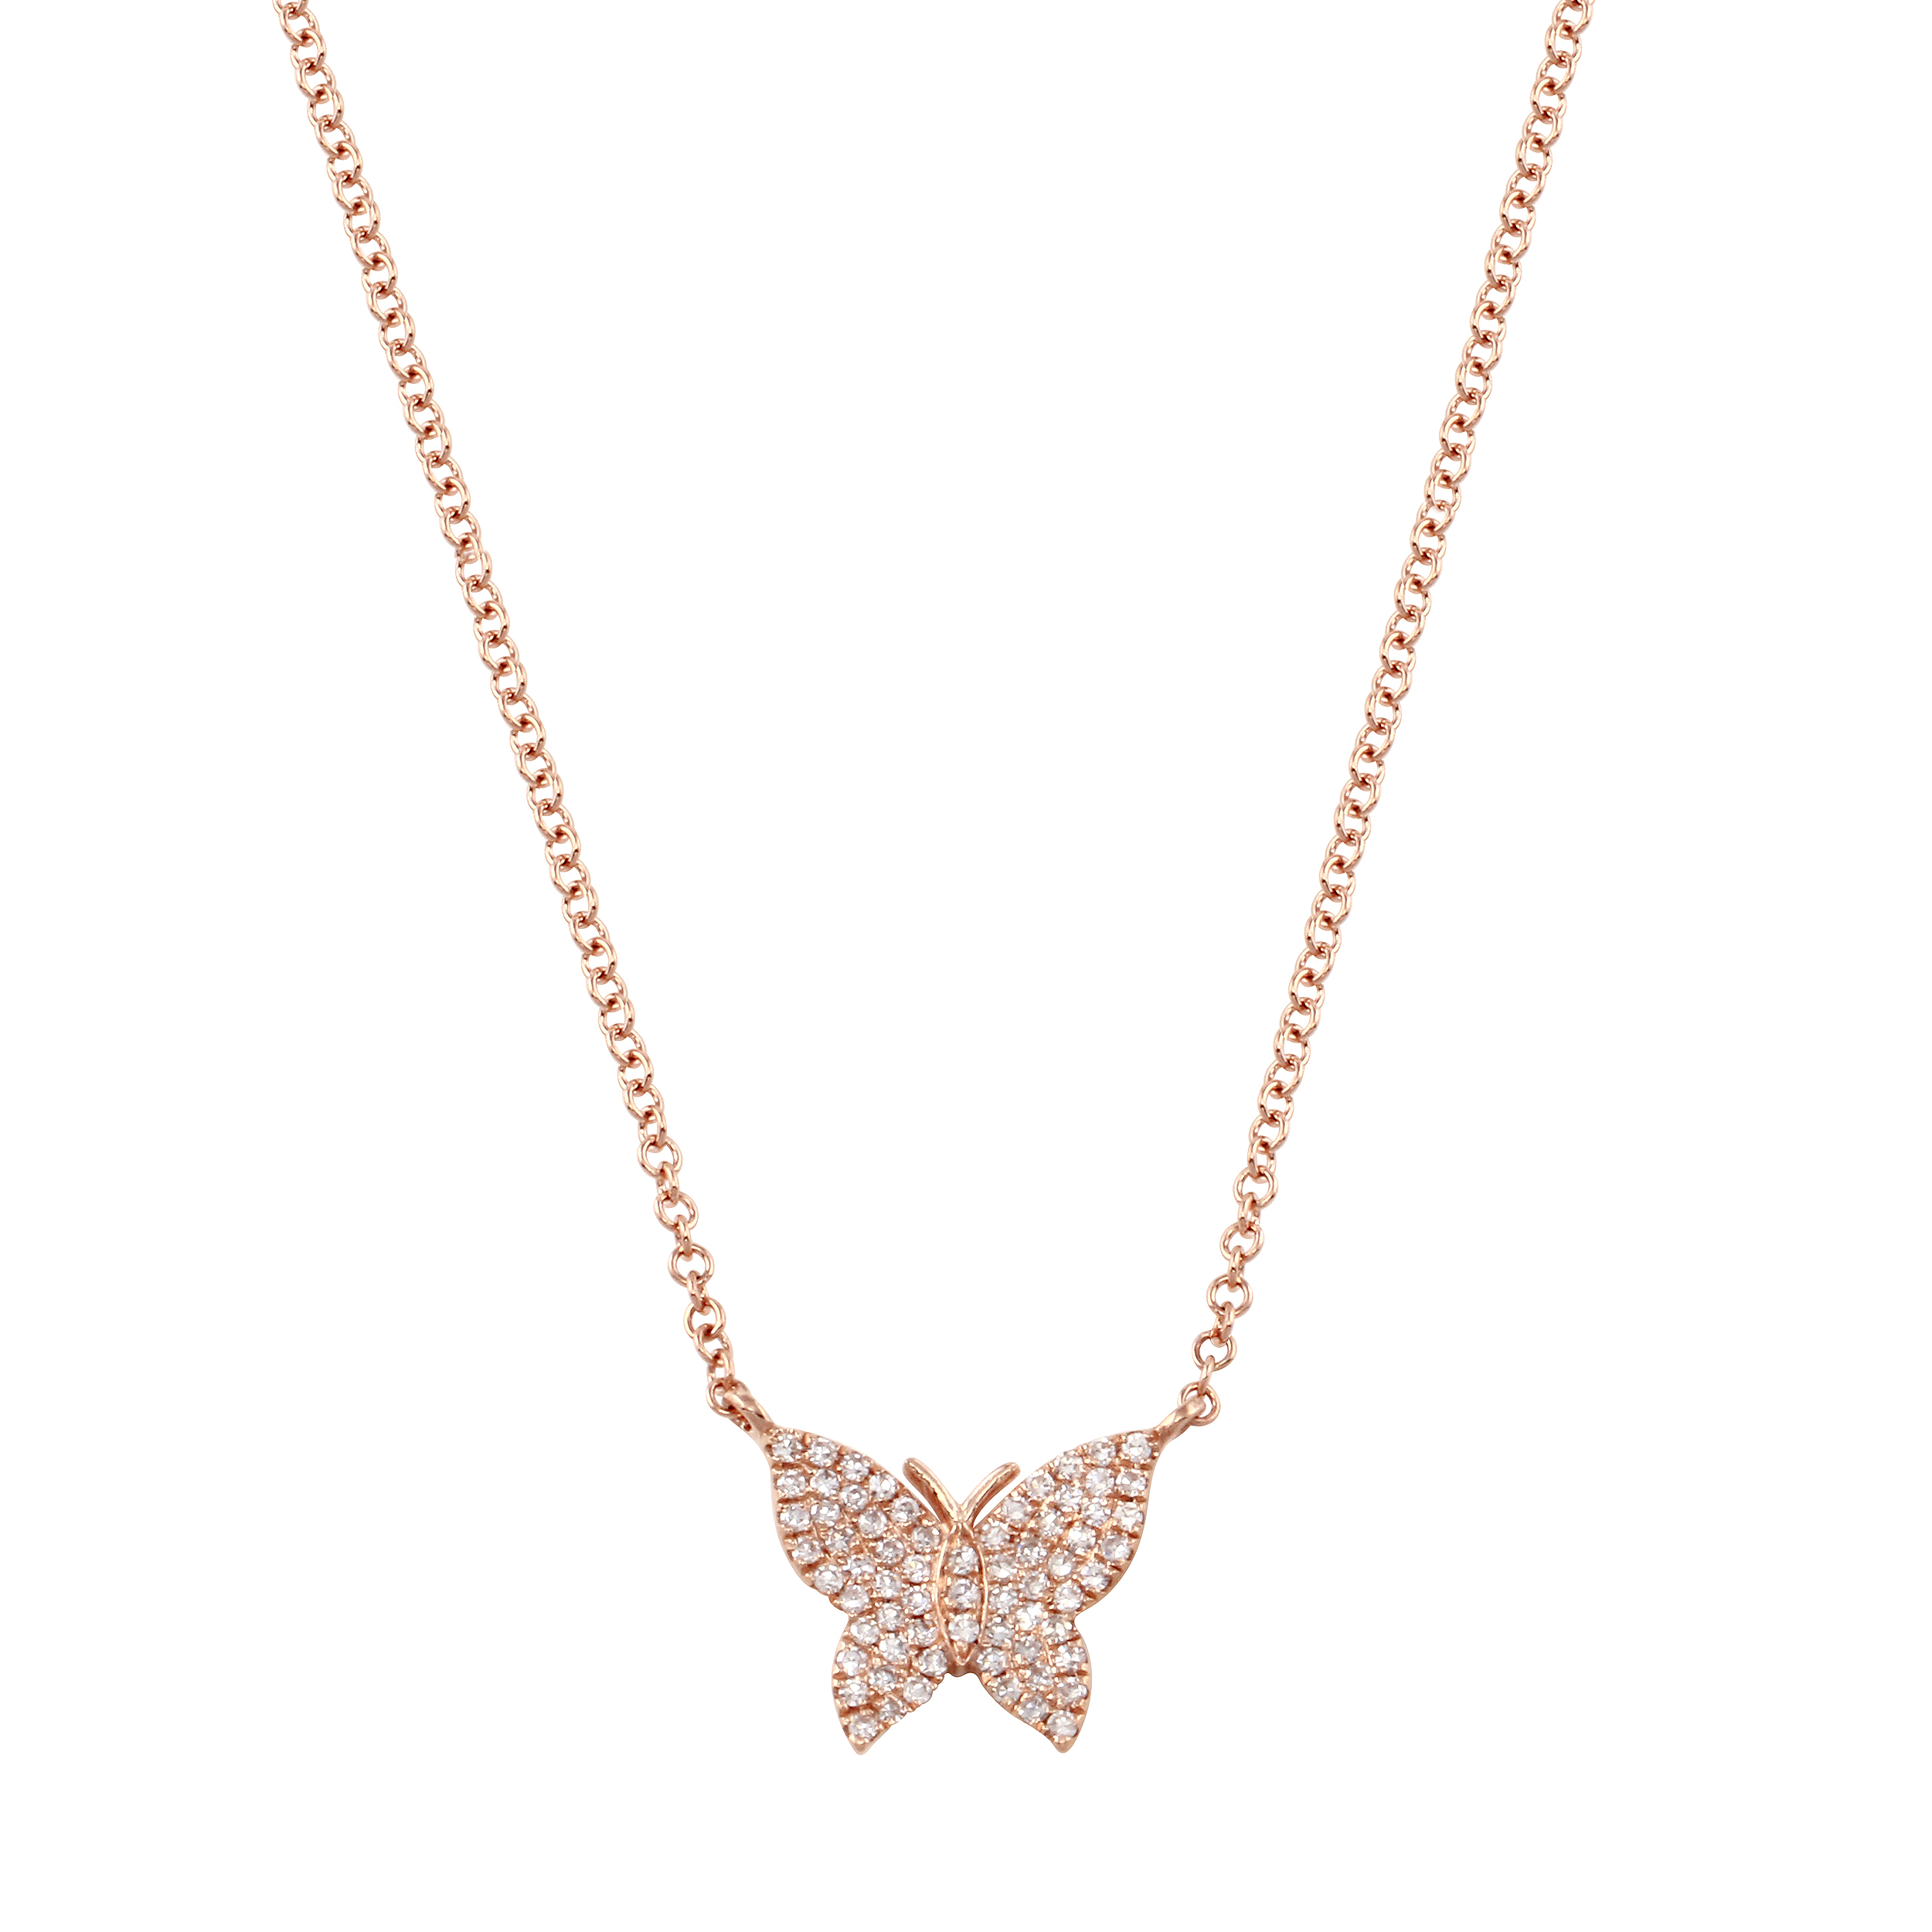 Pave Diamond Butterfly Necklace - Moondance Jewelry Gallery